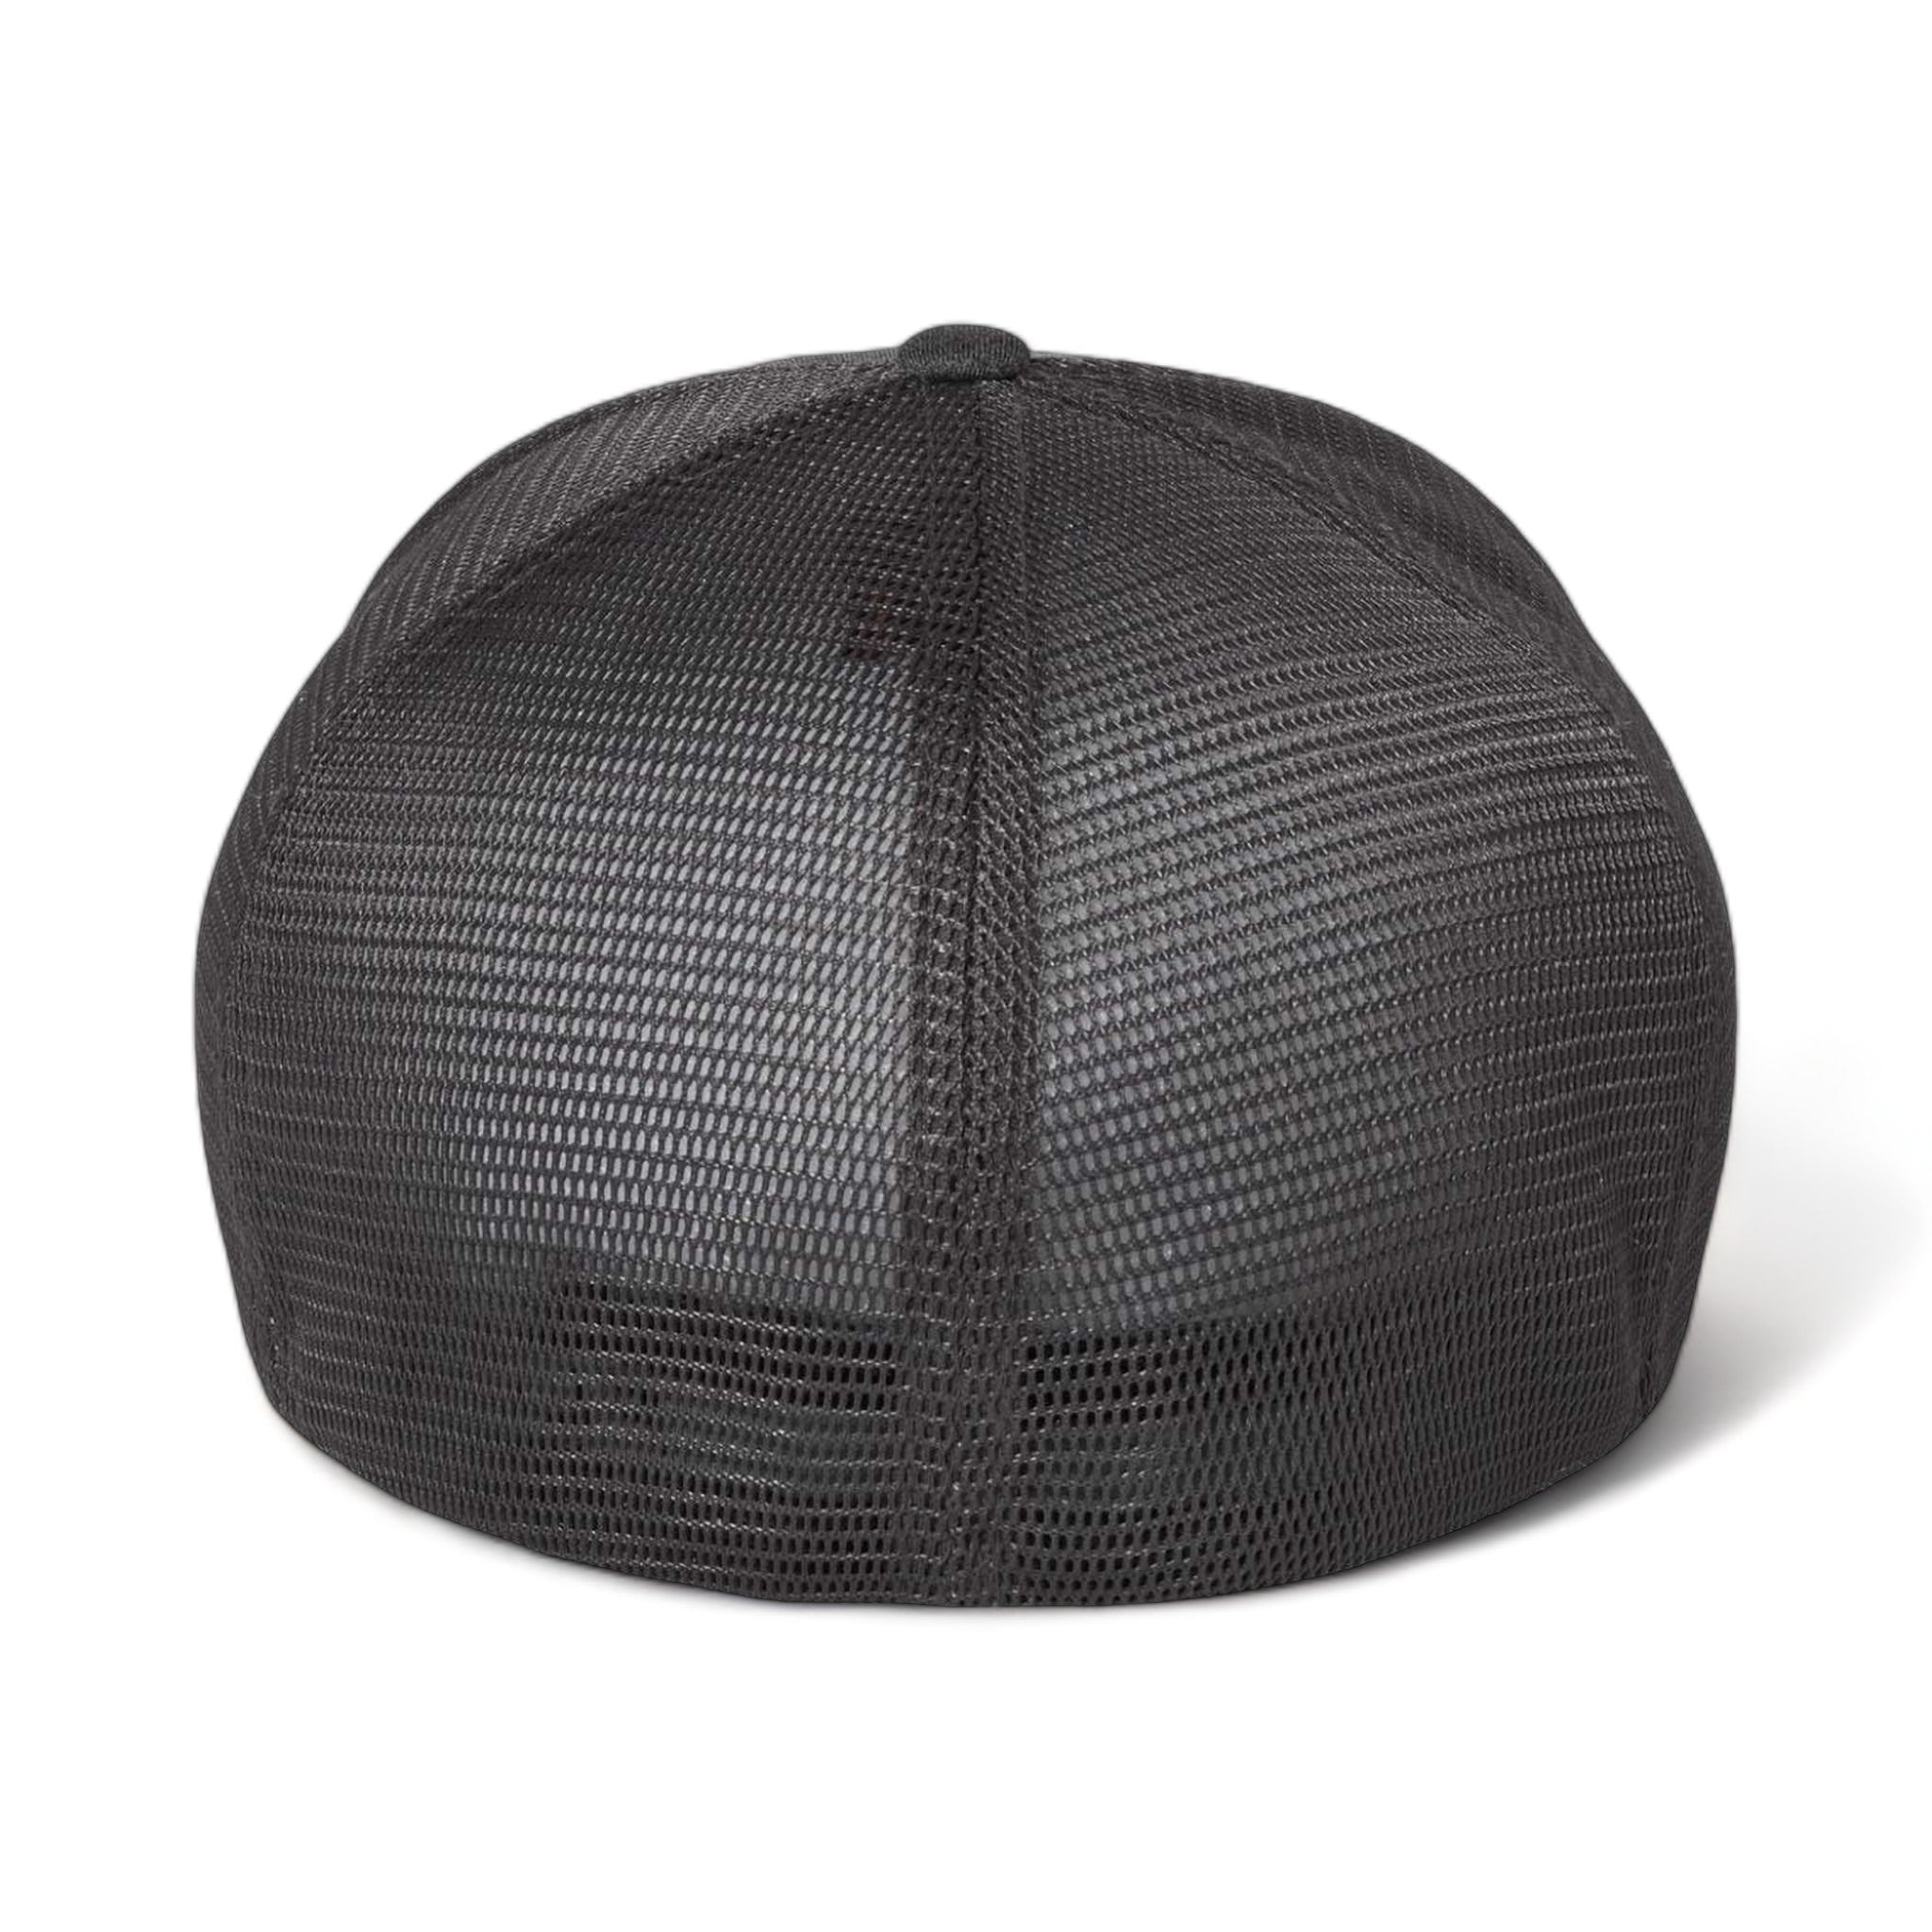 Back view of Flexfit 5511UP custom hat in mélange dark grey